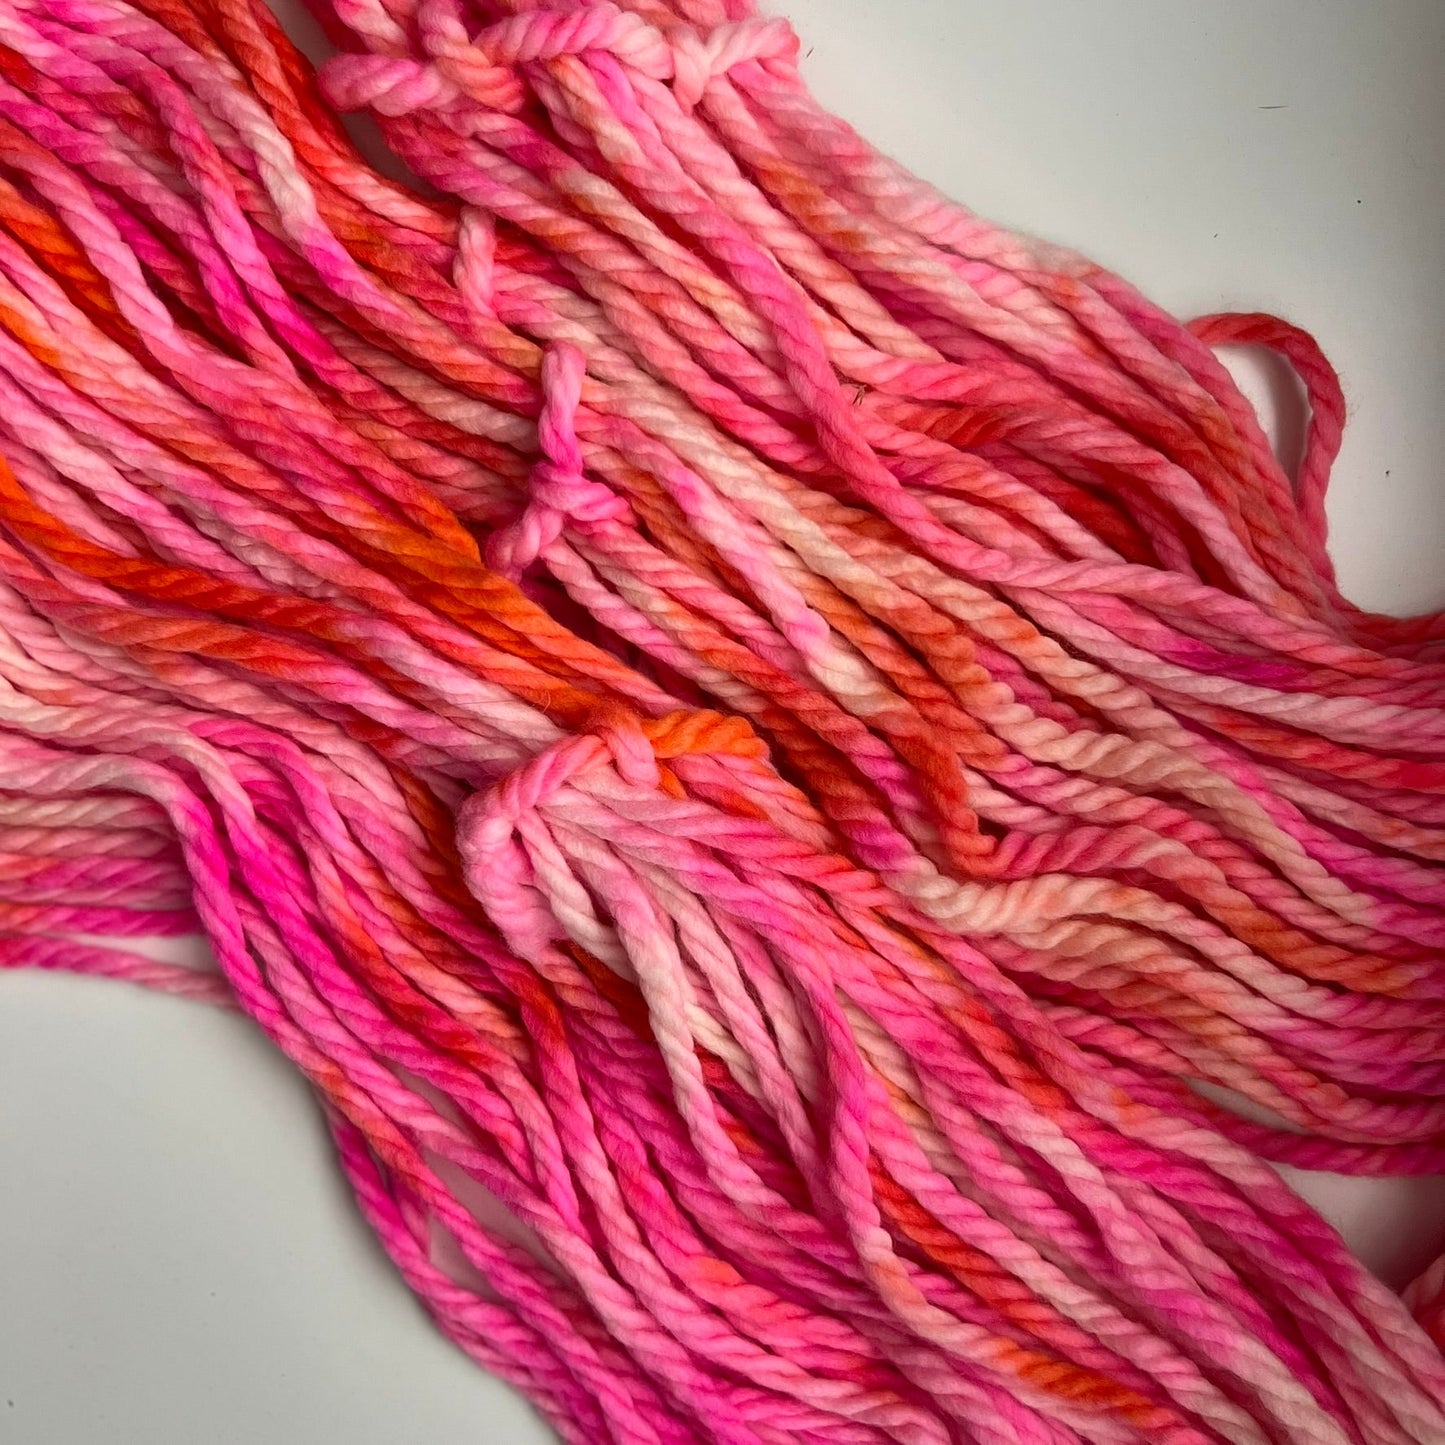 Summer Camp Fibers - Camp Super Bulky Hand Dyed Yarn - Nantucket Sleigh Ride